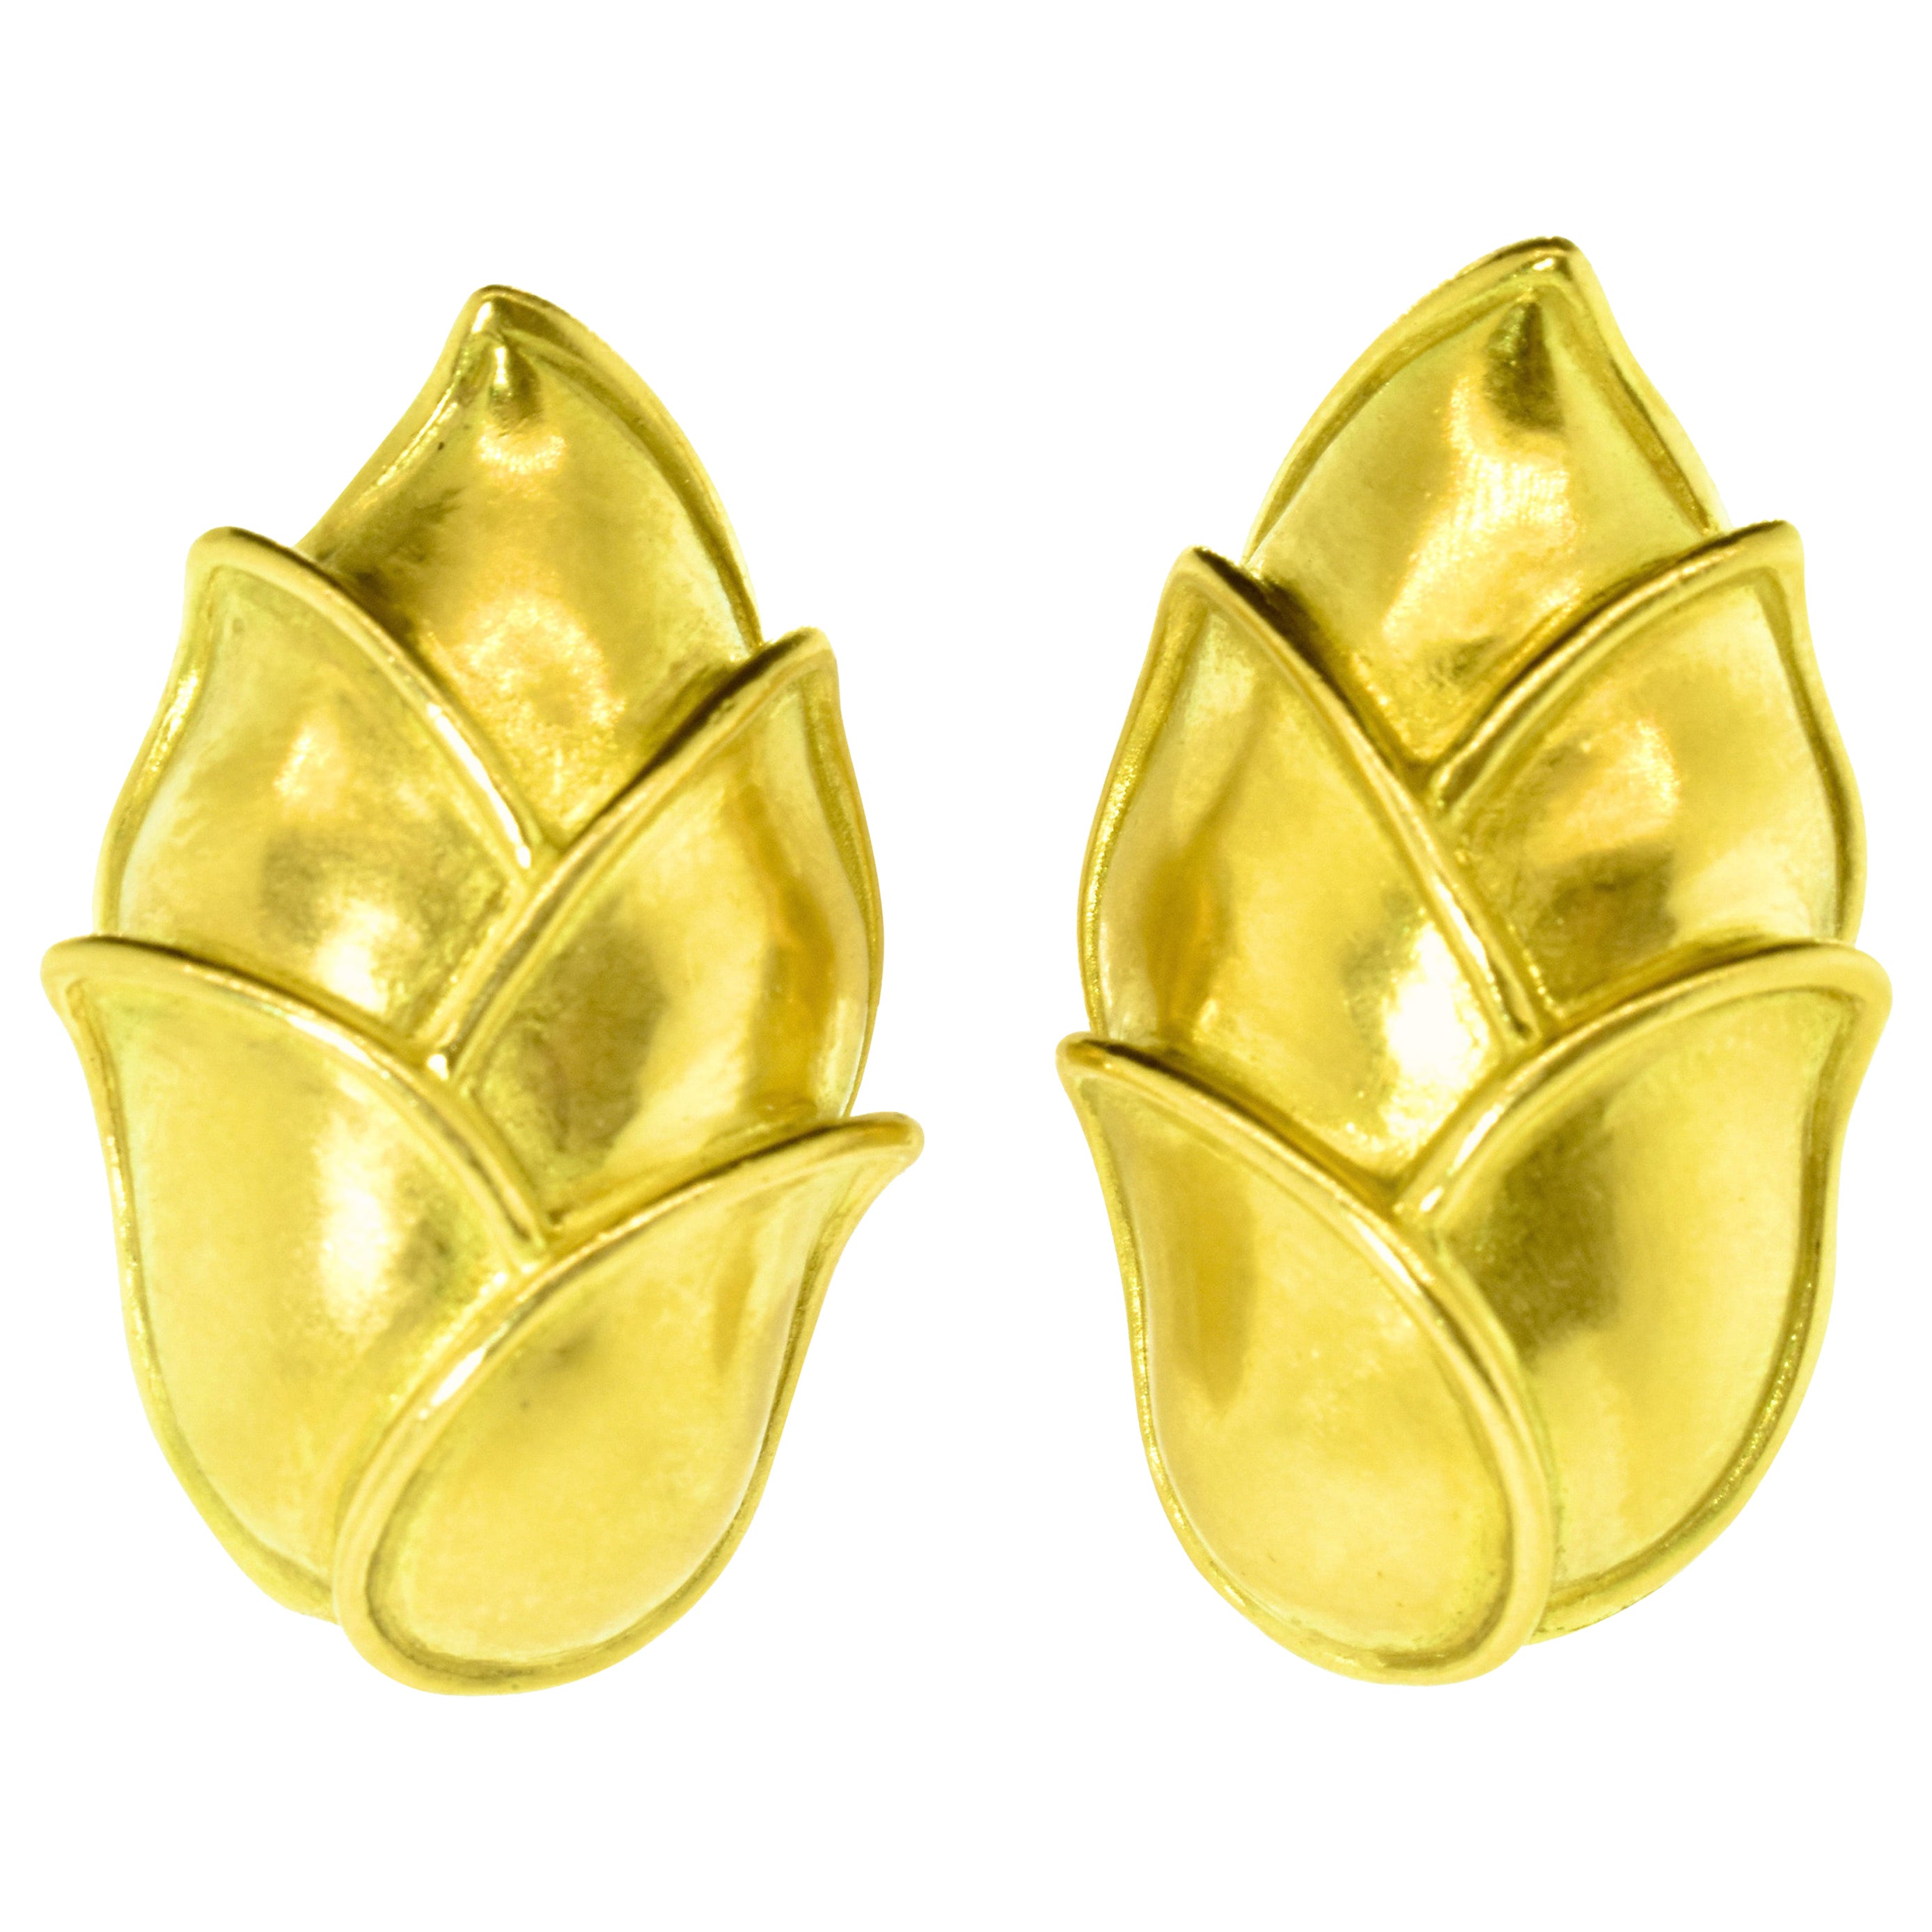  18K Gold Earrings, by Angela Cummings, circa 1989. For Sale